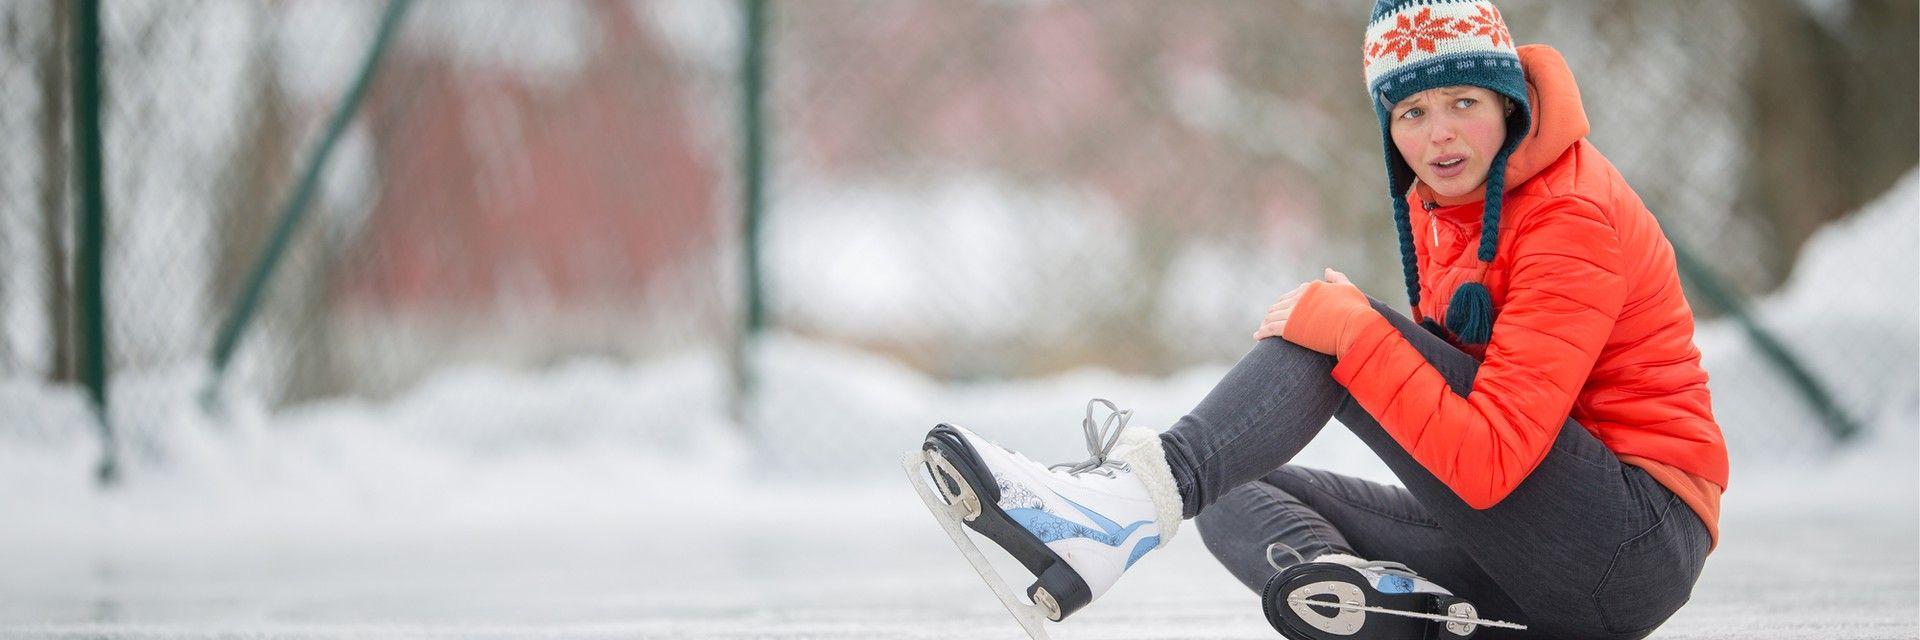 Winter-Sports-Injury-Prevention